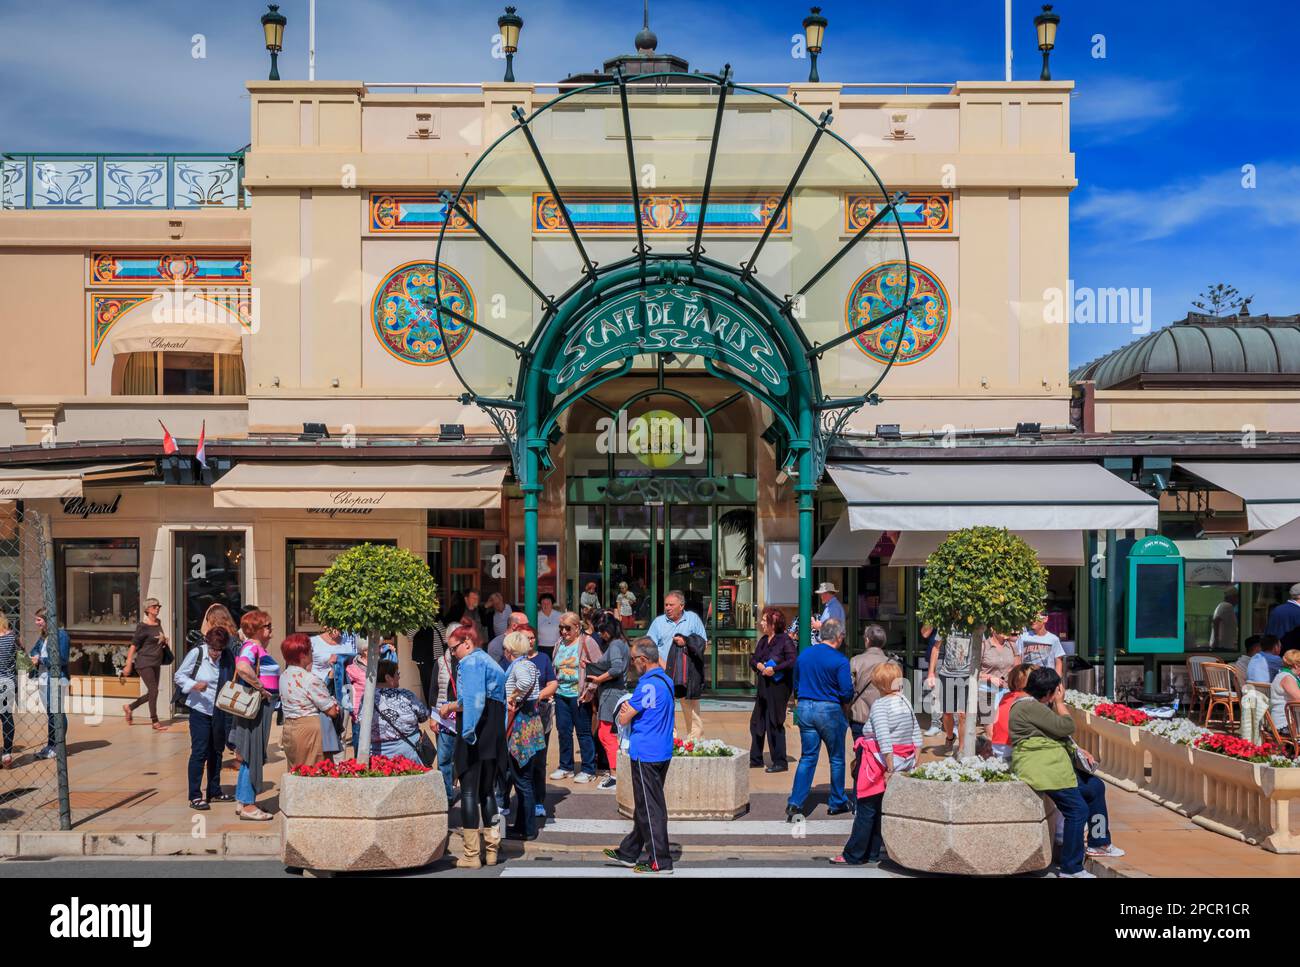 Monte Carlo, Monaco - April 20, 2016: Ornate facade of the Cafe de Paris, famous elegant art nouveau brasserie at the Grand Casino Stock Photo